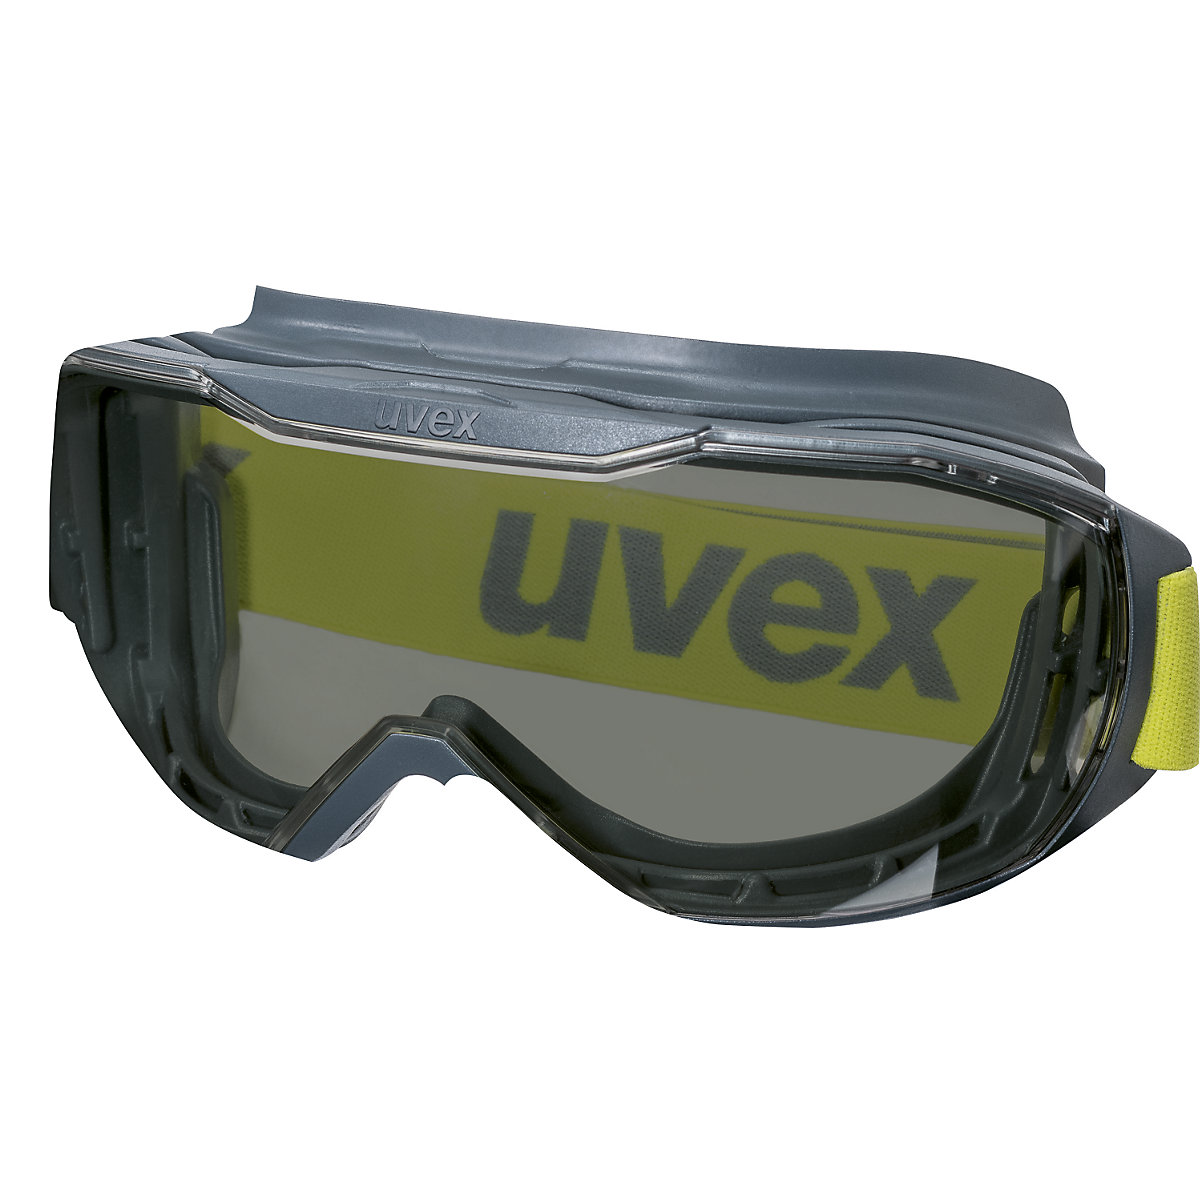 megasonic goggles – Uvex